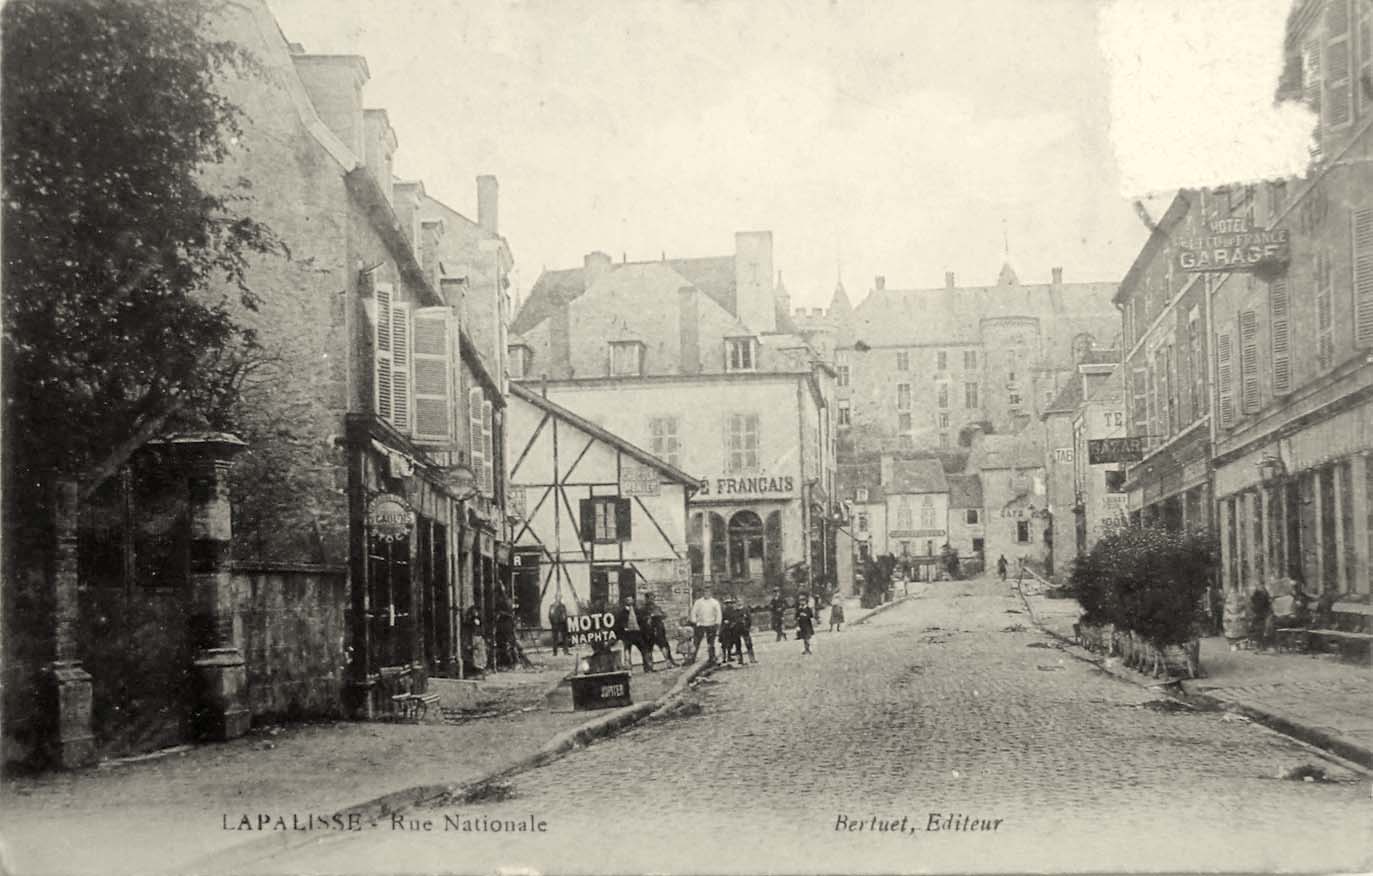 Lapalisse. Rue Nationale, 1913